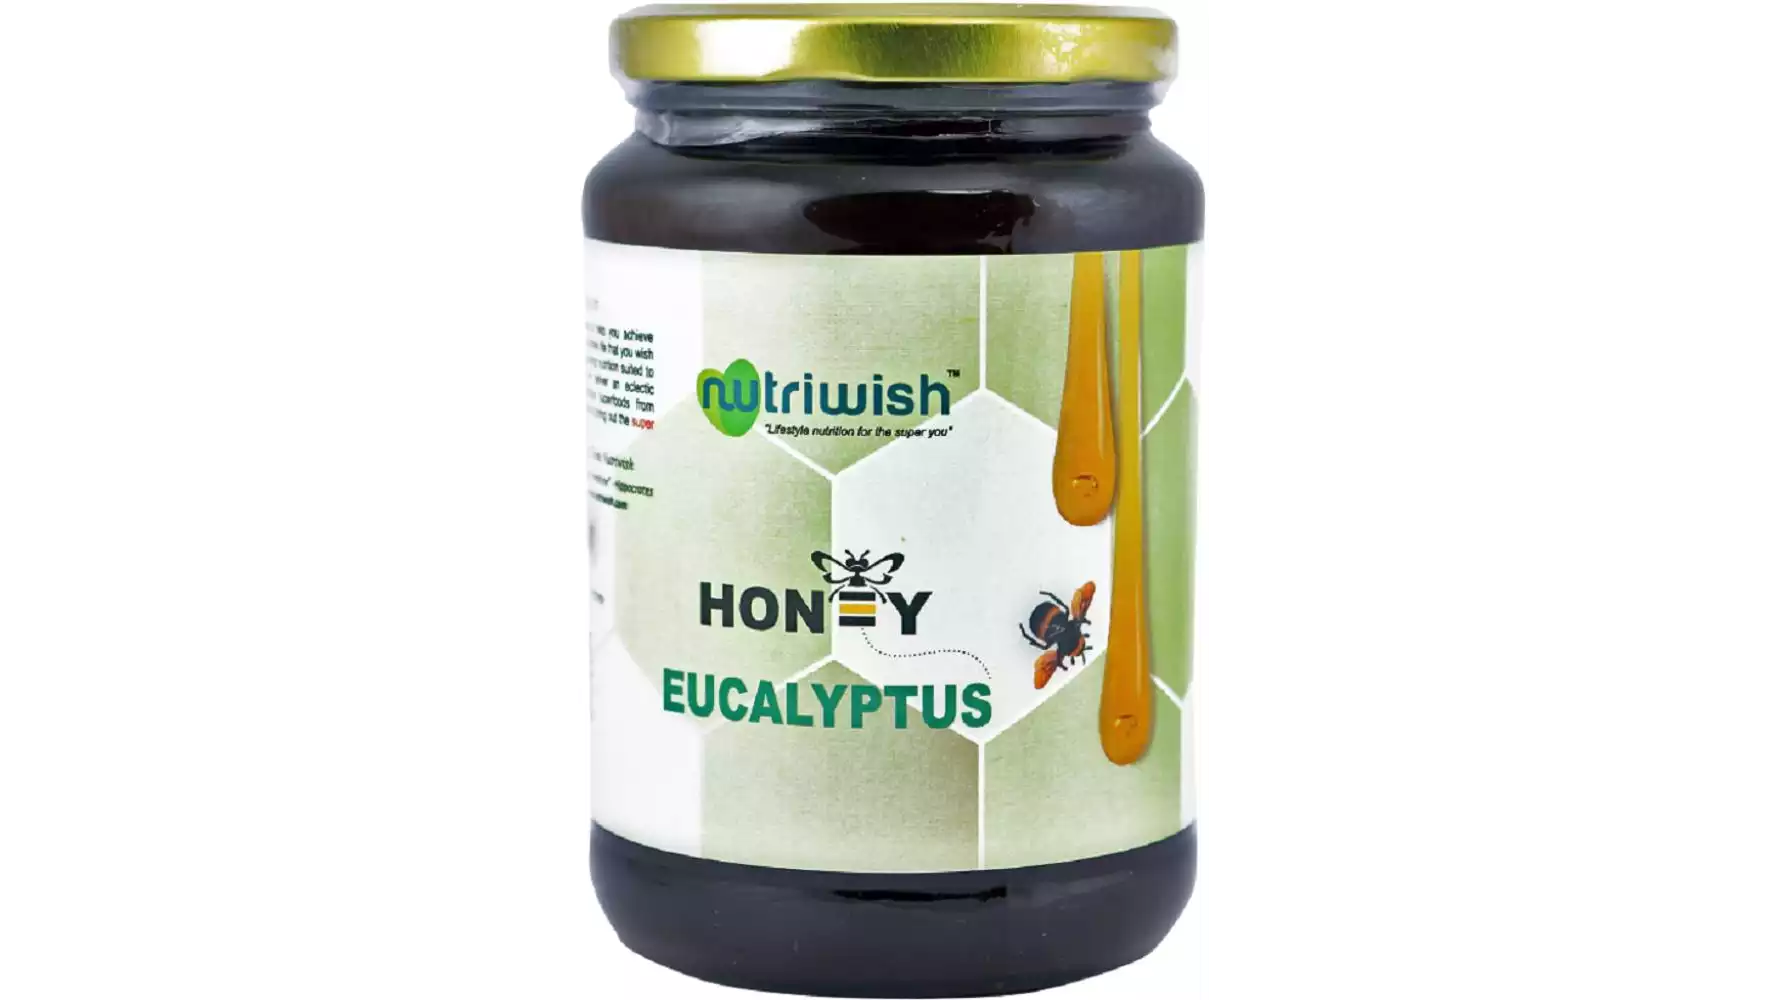 Nutriwish Eucalyptus Honey (1kg)